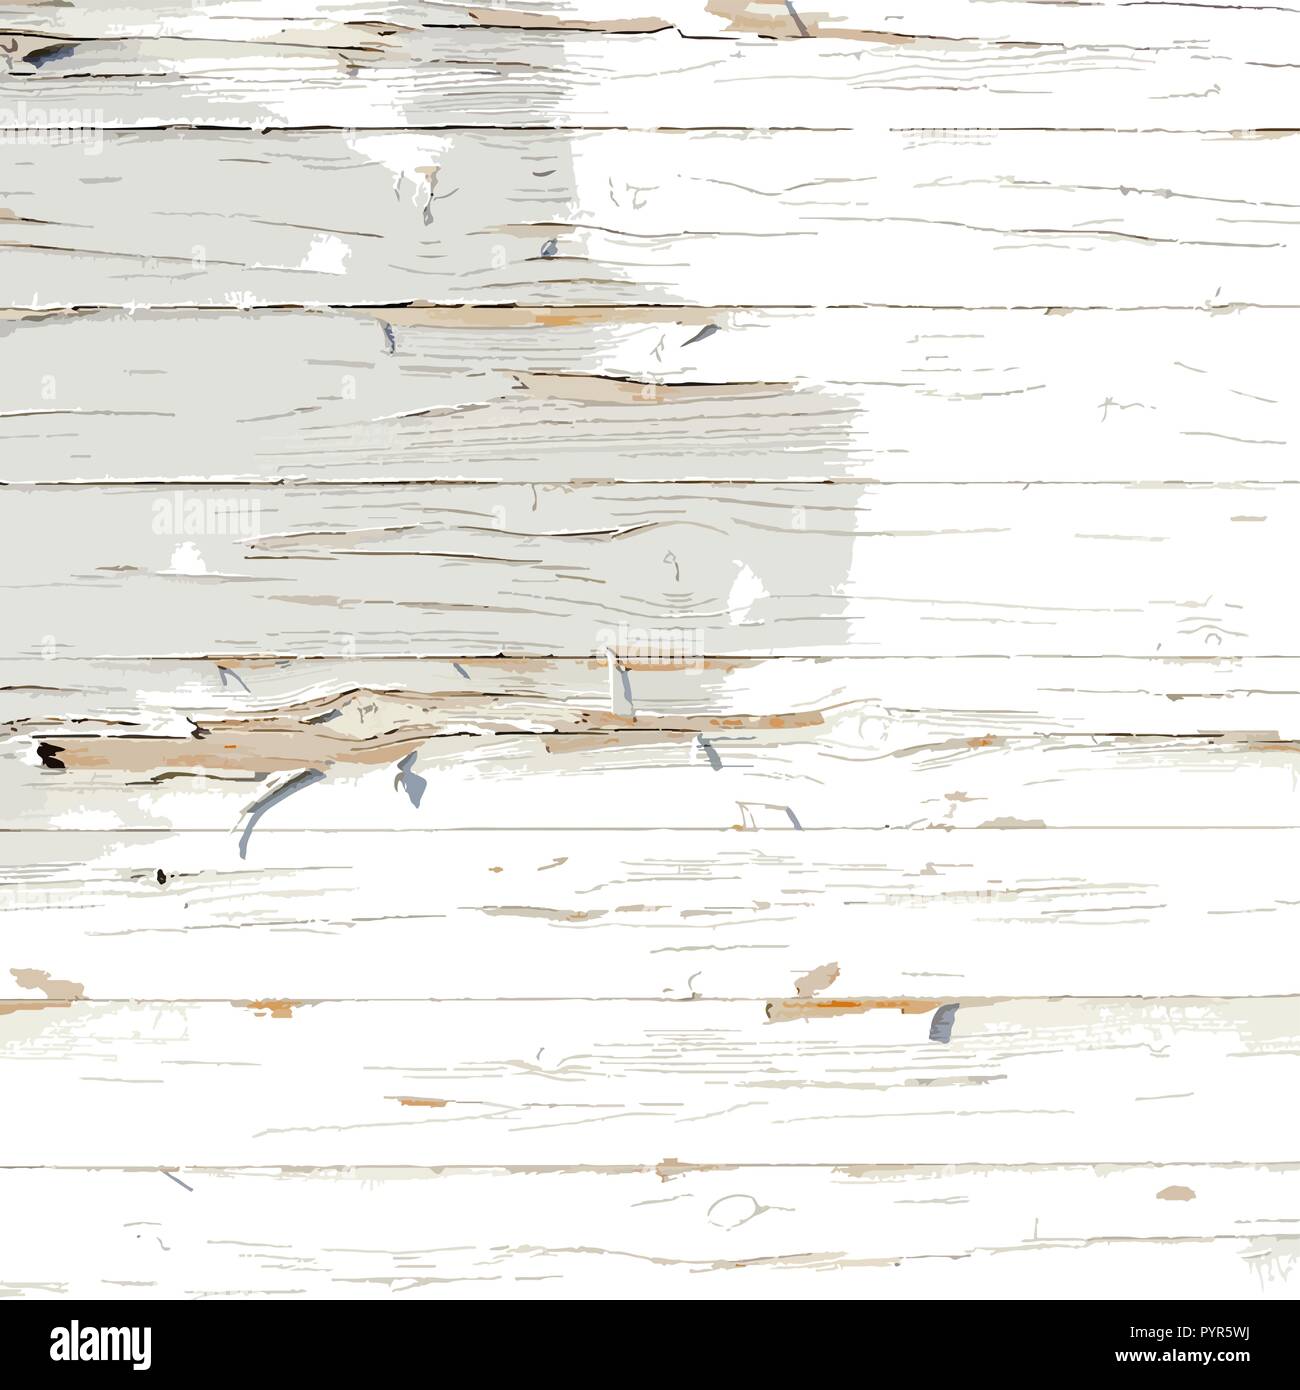 Horizontal wooden planks background. Vector Illustration for high resolution prints. Stock Vector